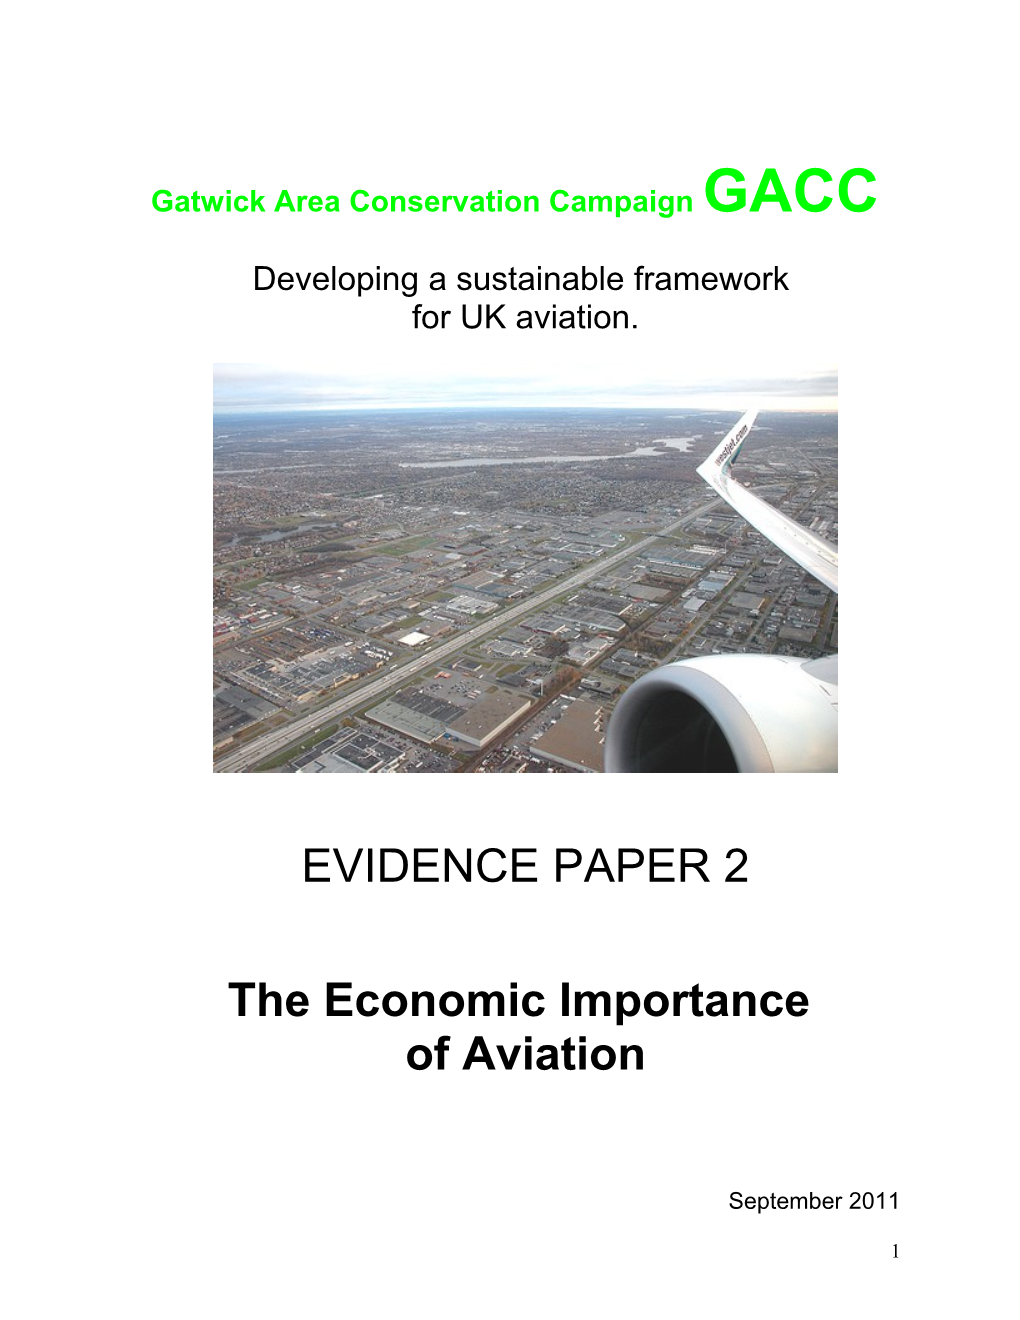 GACC Research Paper 1